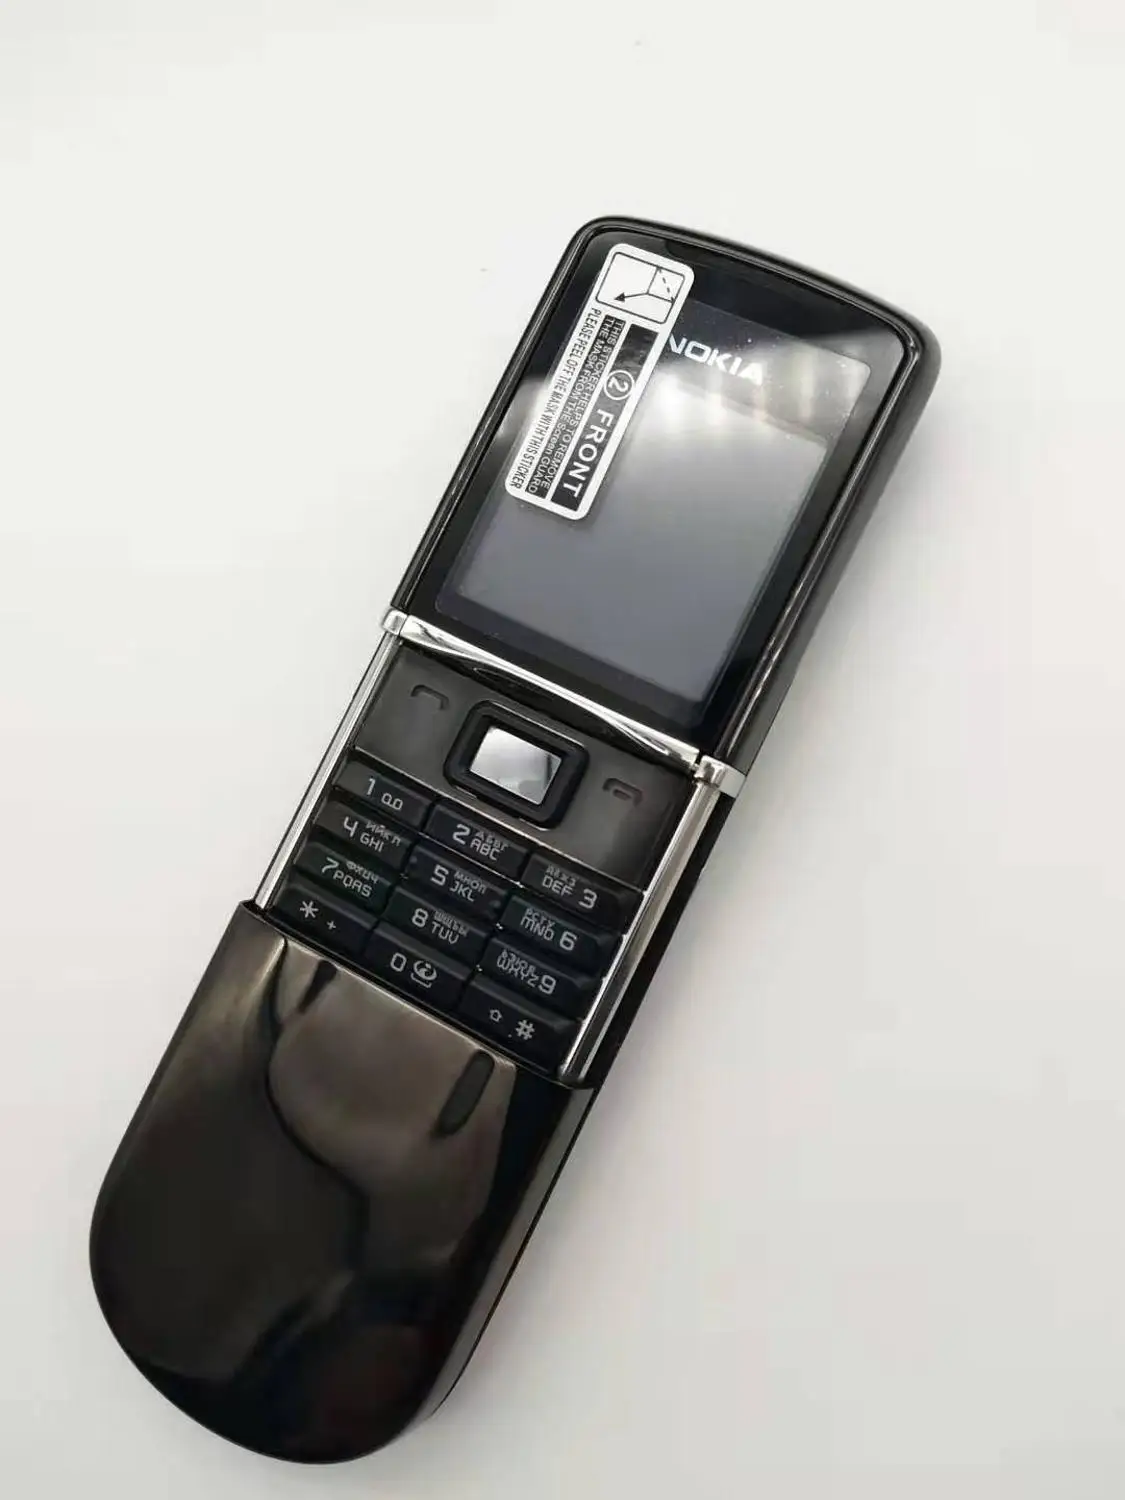 nokia 8800 sirocco refurbished original 8800s 128mb phones english russian keyboard gsm fm phone gold silver black free global shipping